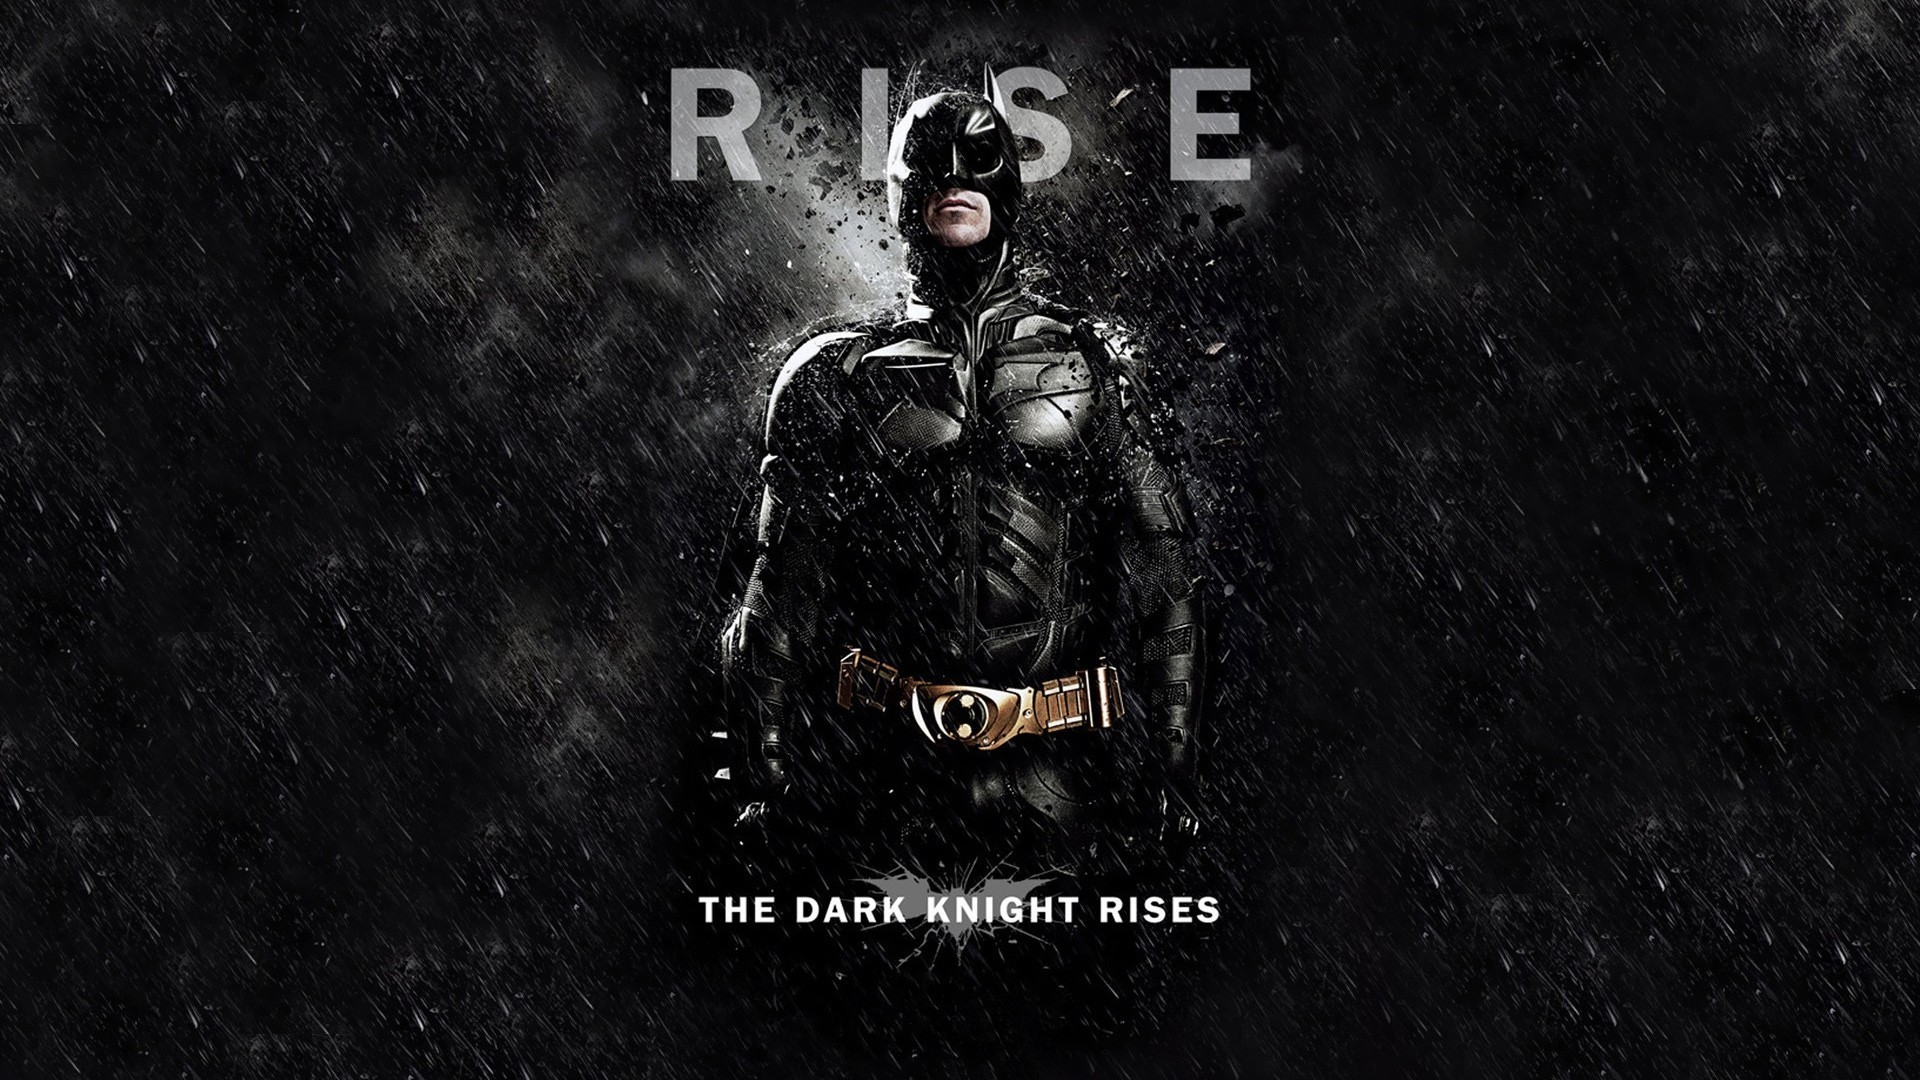 General 1920x1080 movies The Dark Knight Rises Batman rain Christian Bale actor superhero DC Comics Warner Brothers Christopher Nolan